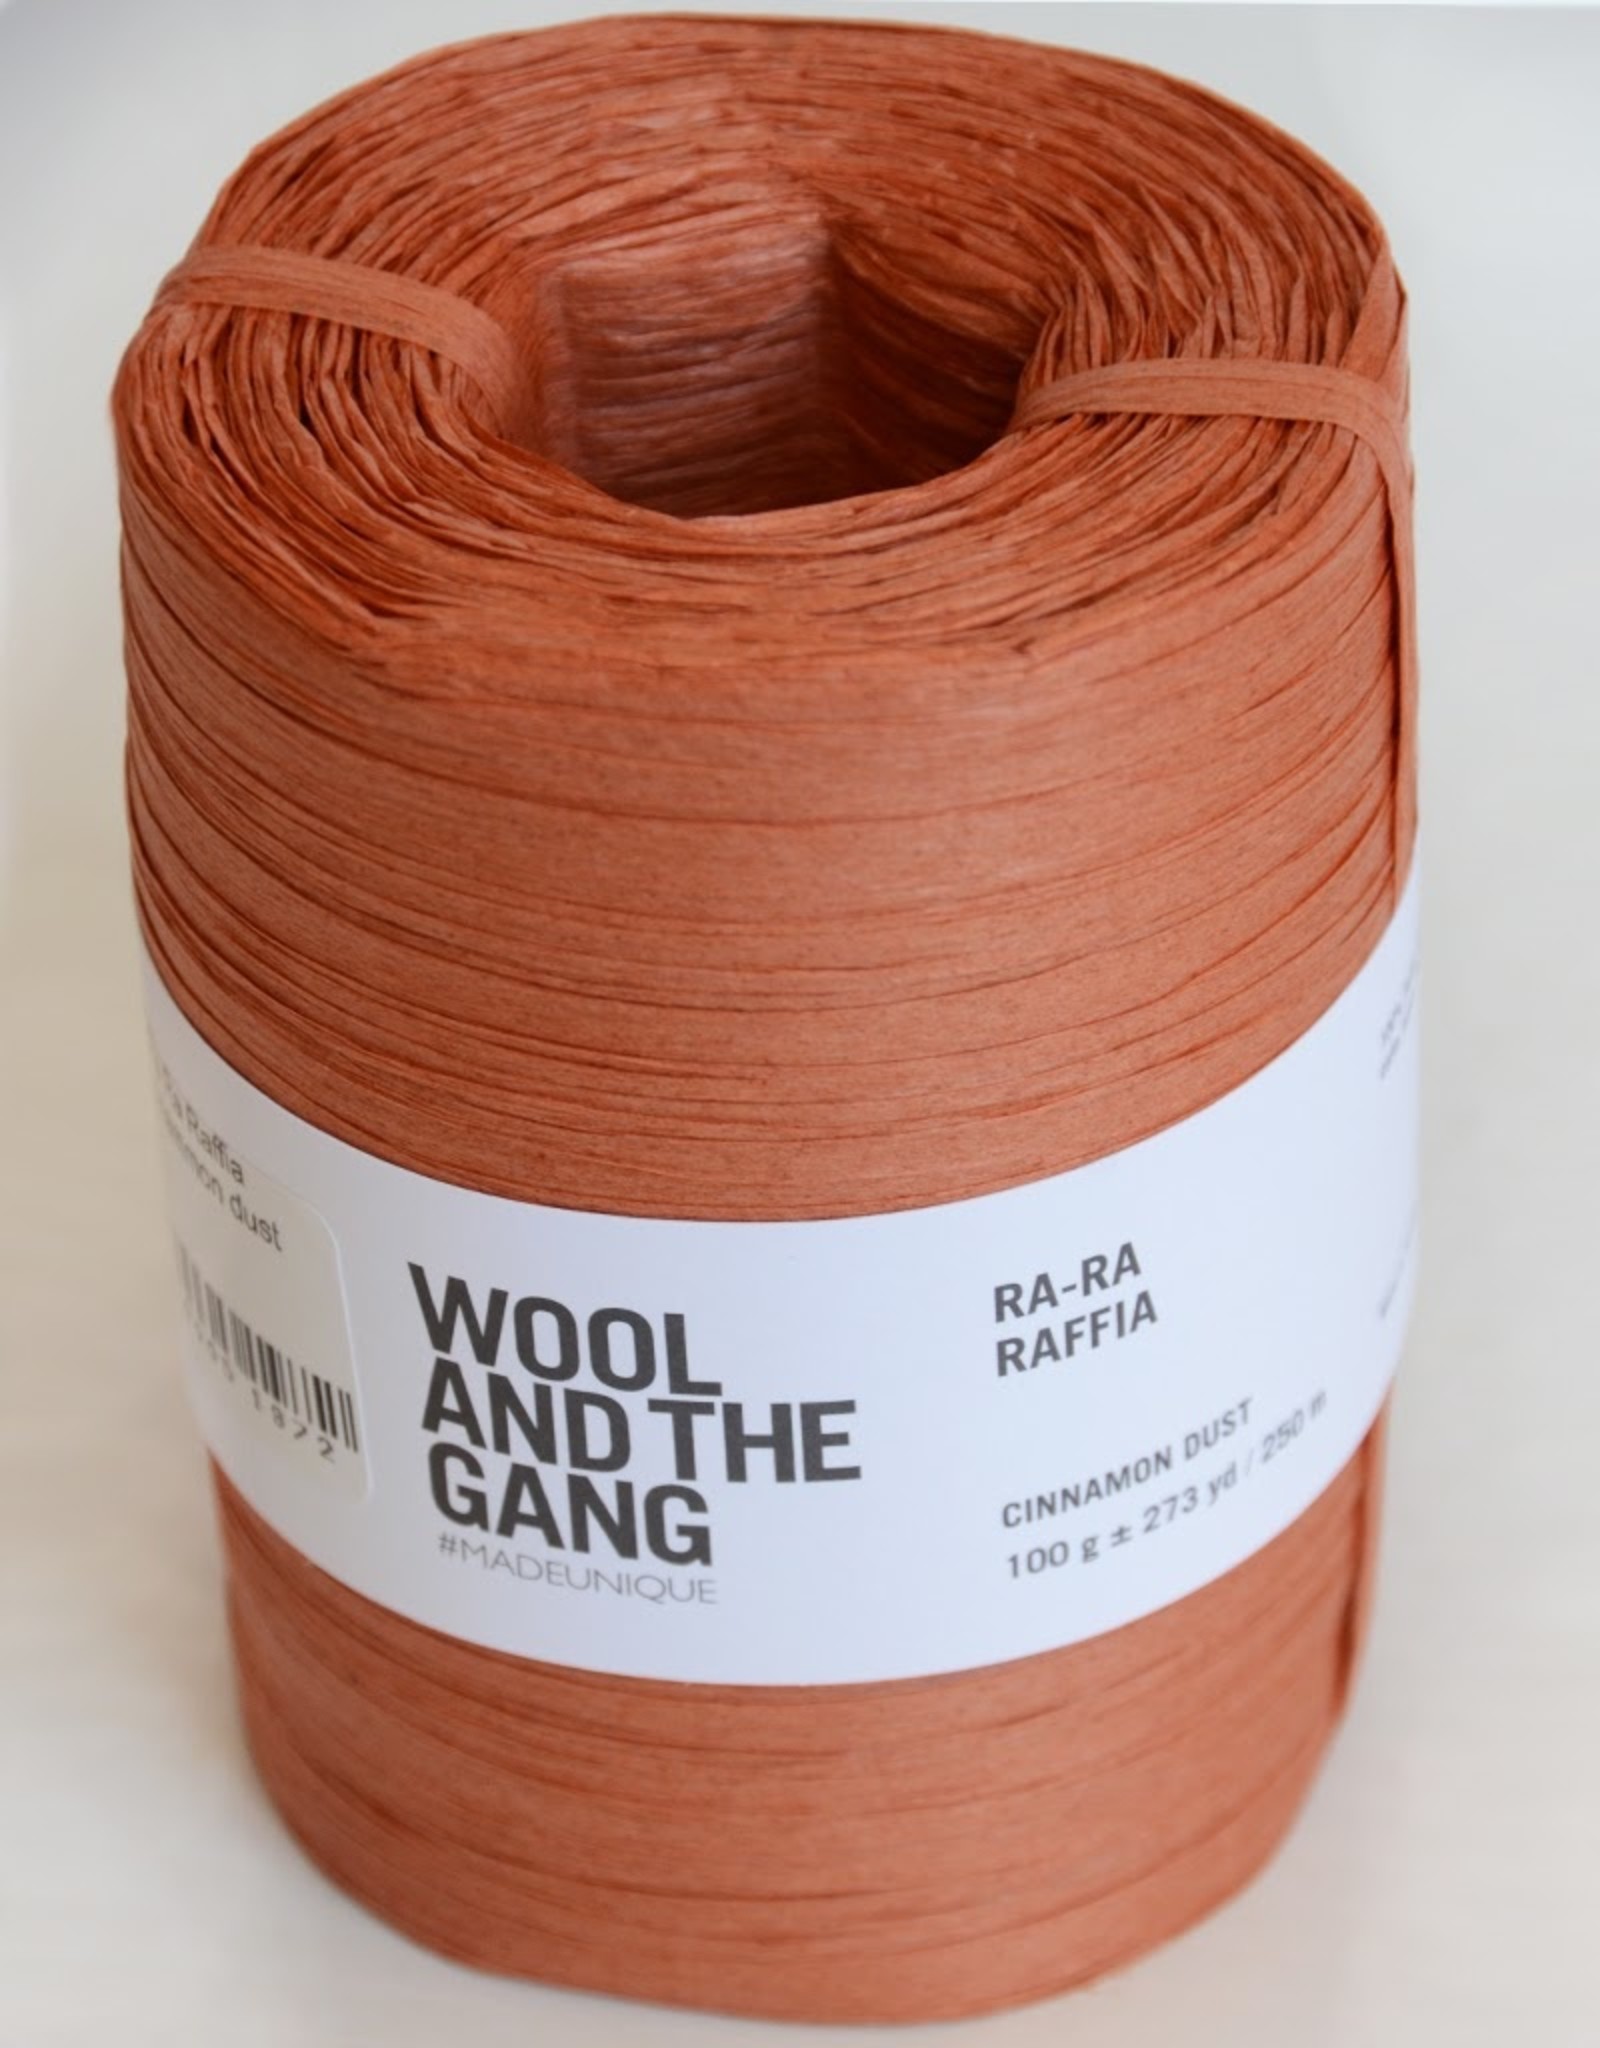 Wool & The Gang Ra Ra Raffia cinammon dust